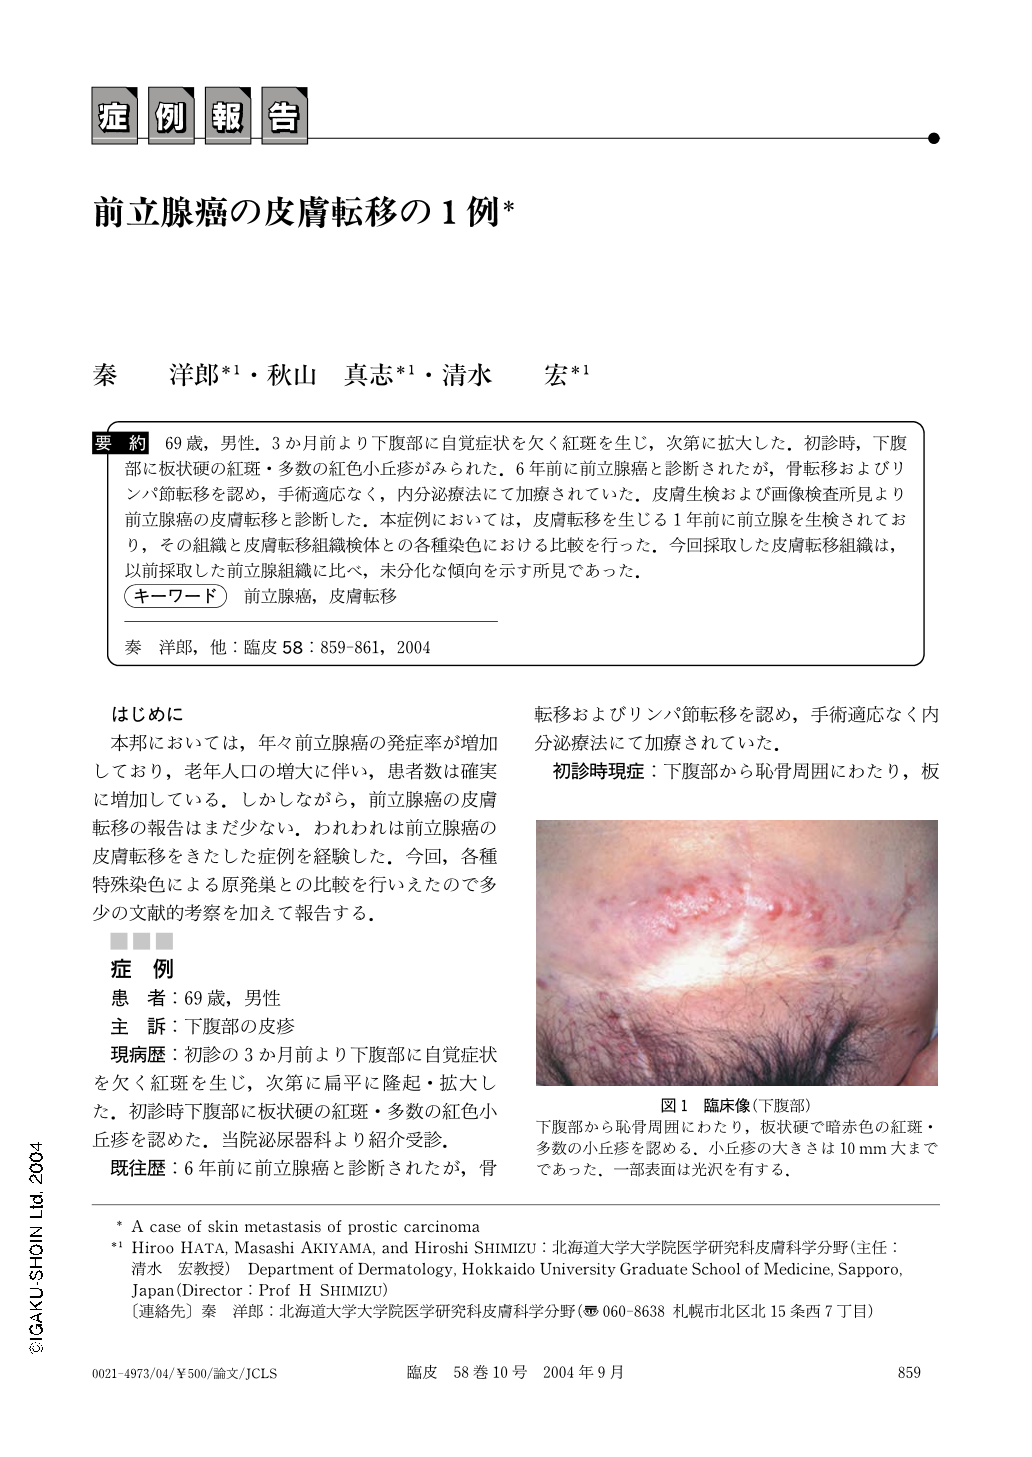 前立腺癌の皮膚転移の1例 臨床皮膚科 58巻10号 医書 Jp